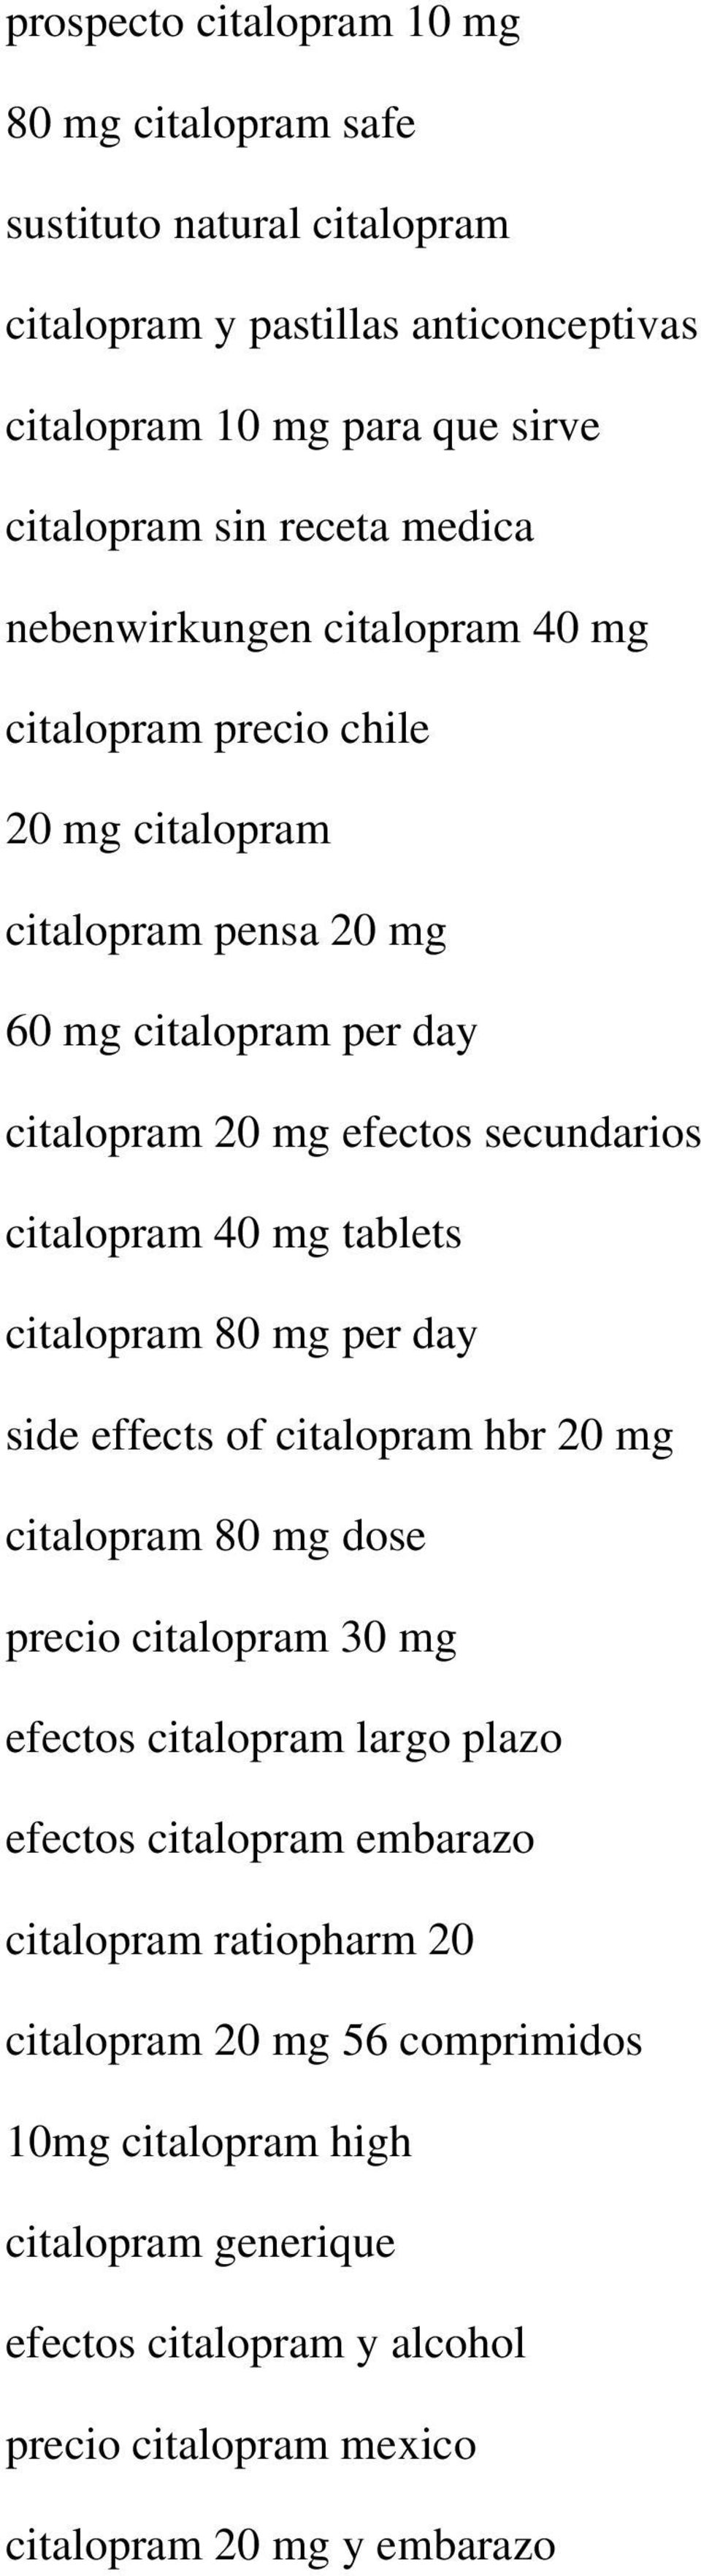 40 mg tablets citalopram 80 mg per day side effects of citalopram hbr 20 mg citalopram 80 mg dose precio citalopram 30 mg efectos citalopram largo plazo efectos citalopram